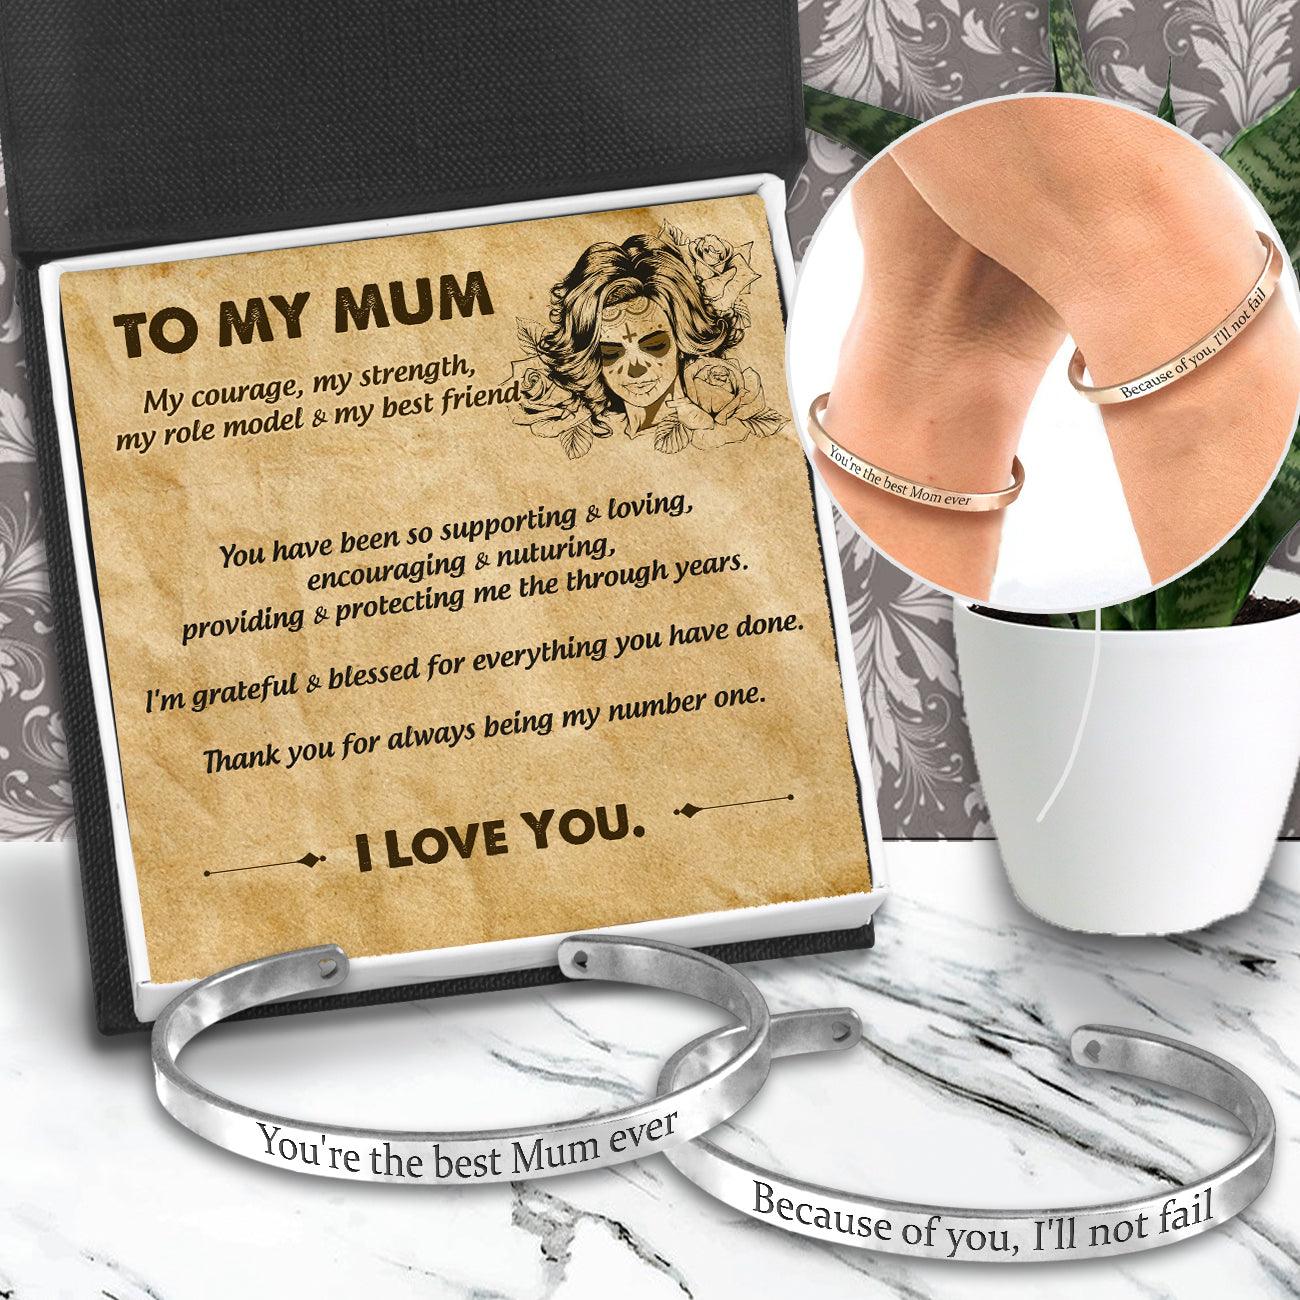 Mum & Daughter Bracelets - Skull - To My Mum - I Love You - Augbt19010 - Gifts Holder